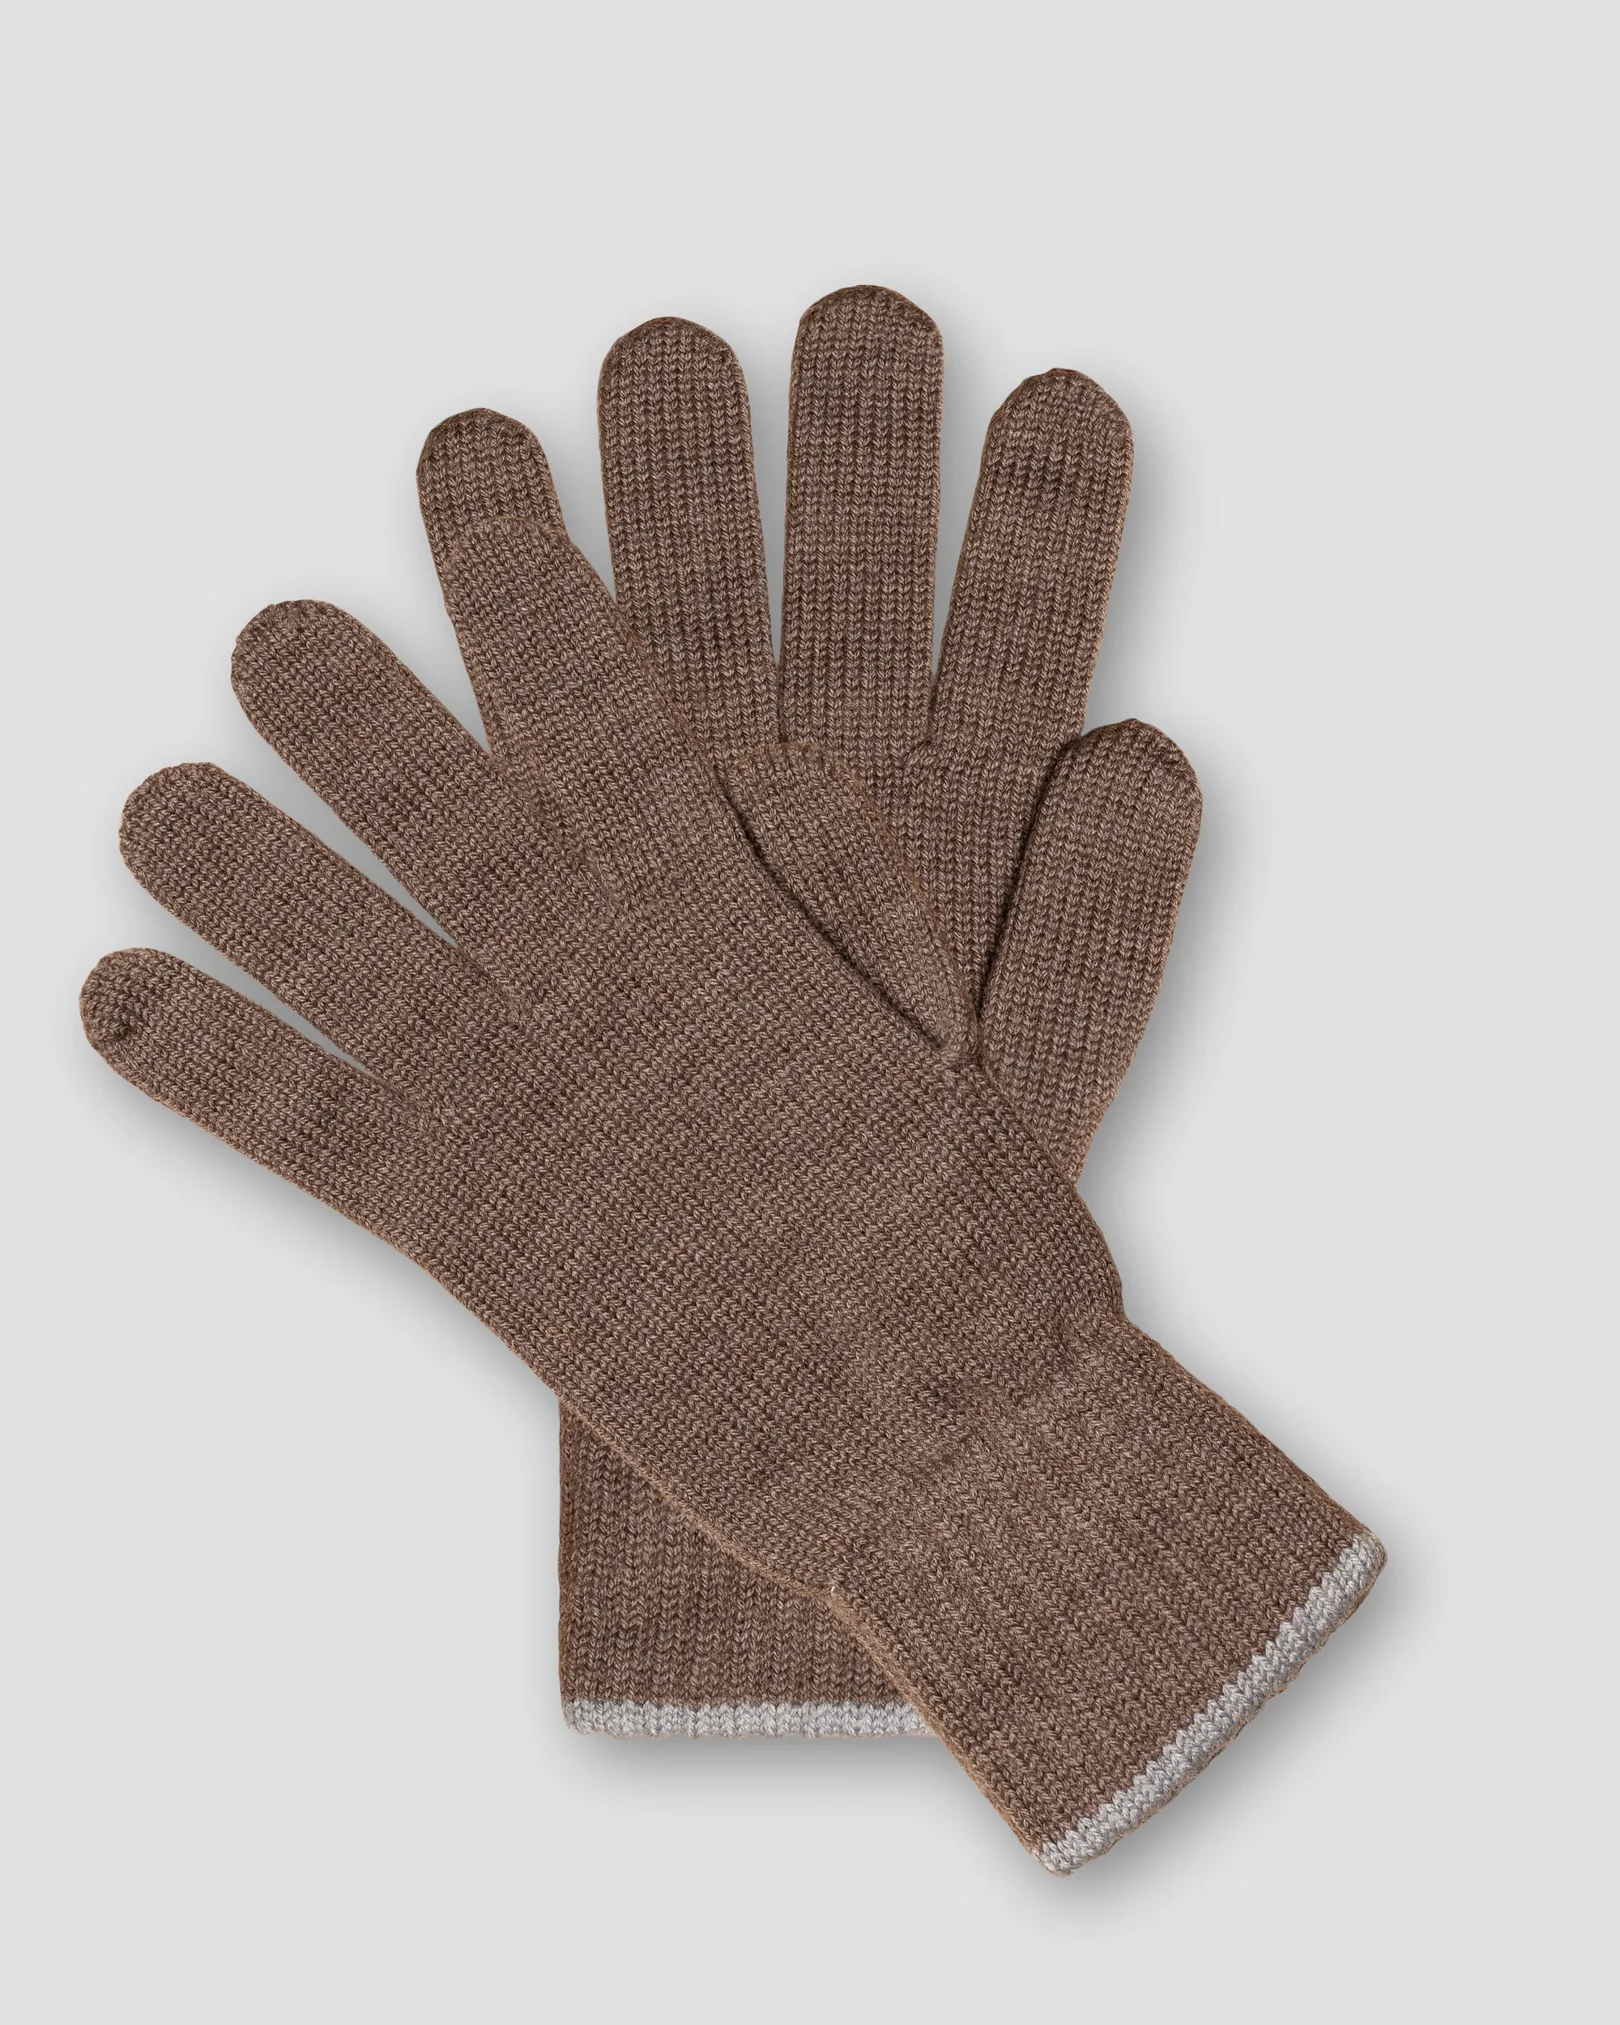 Eton - brown knitted gloves